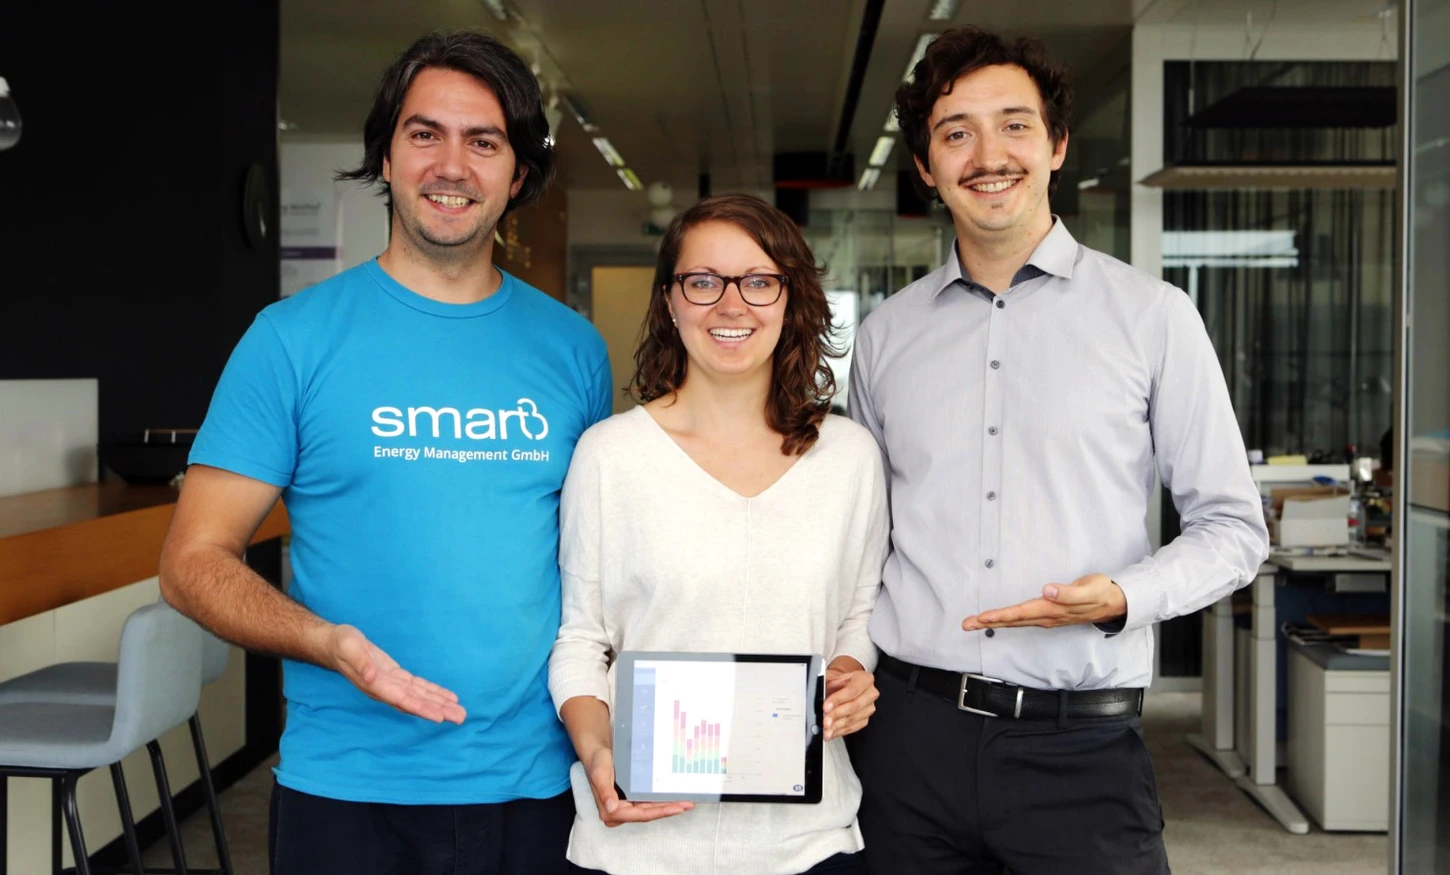 Team: smartB Energy Management GmbH